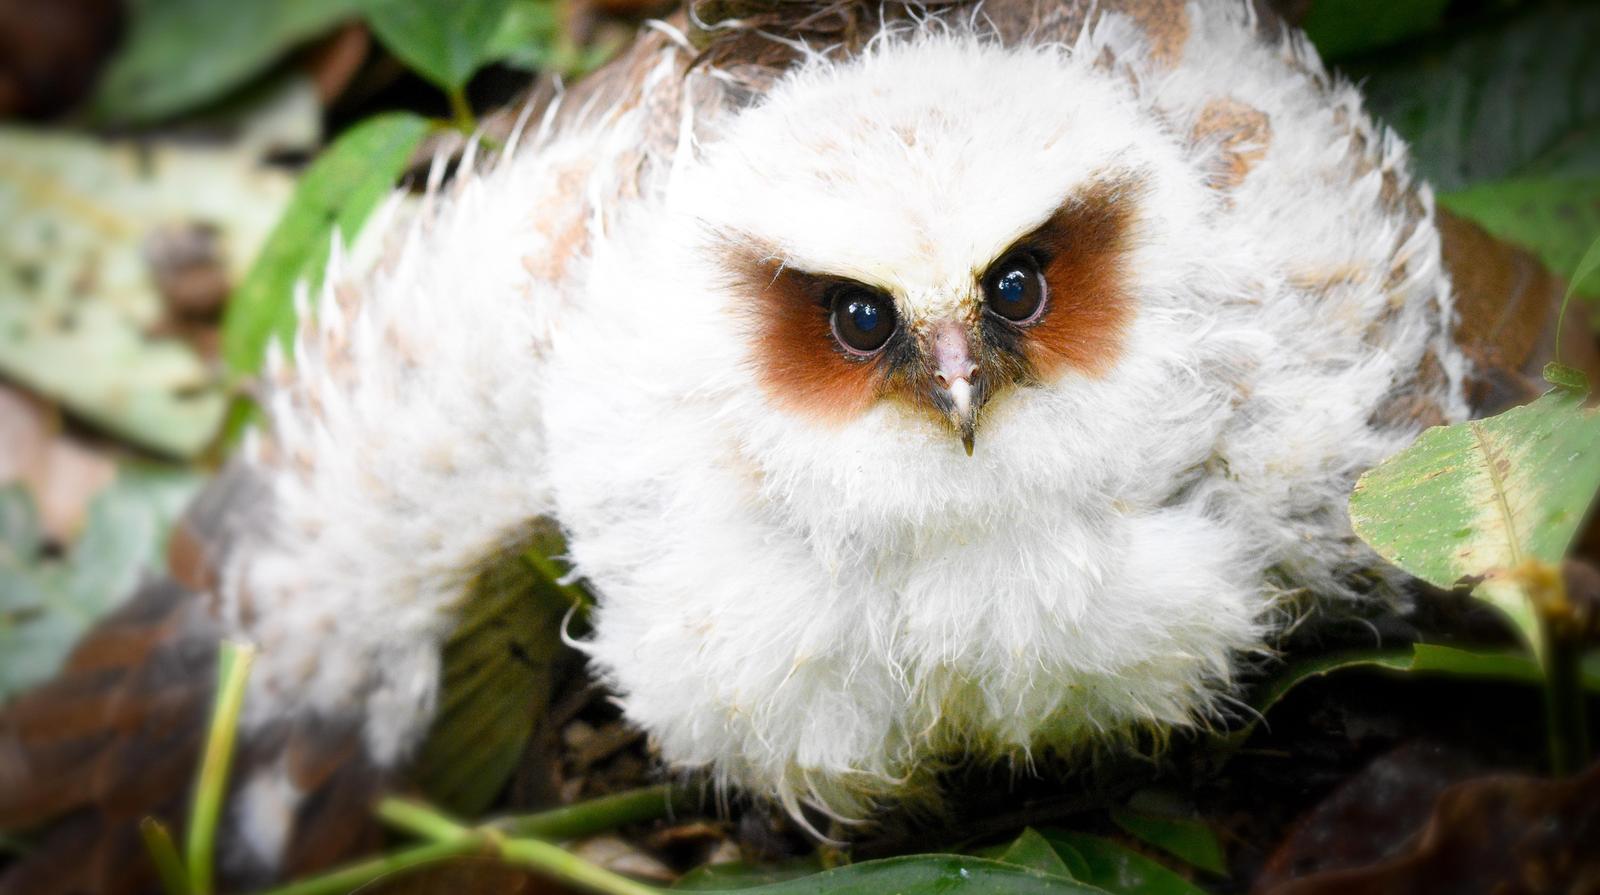 Crested Owl Photo by Julio Delgado